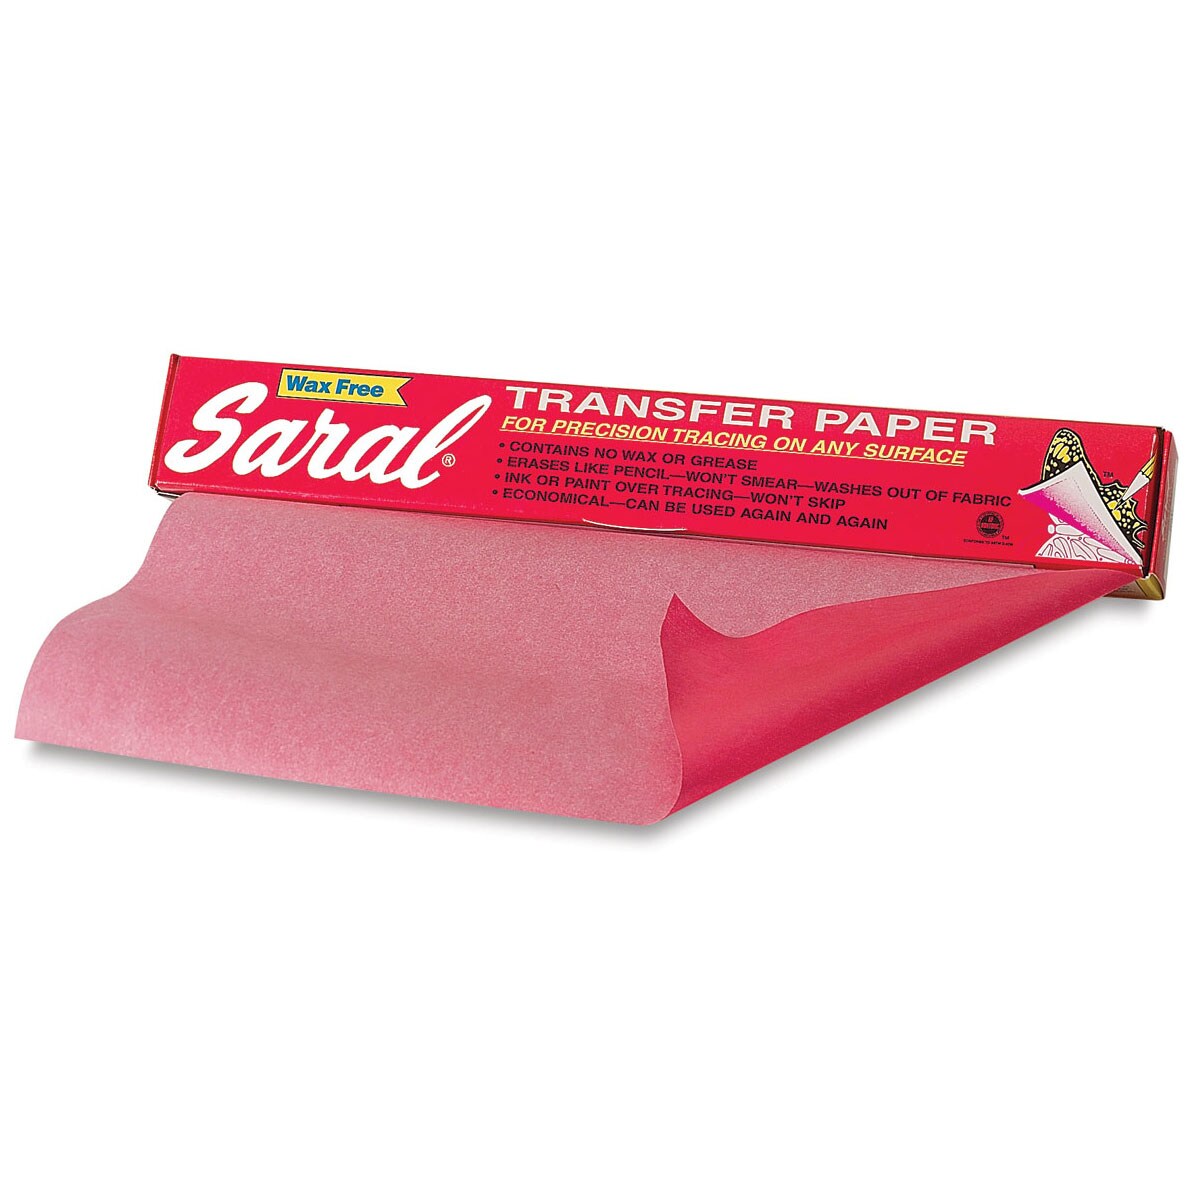 Saral transfer paper